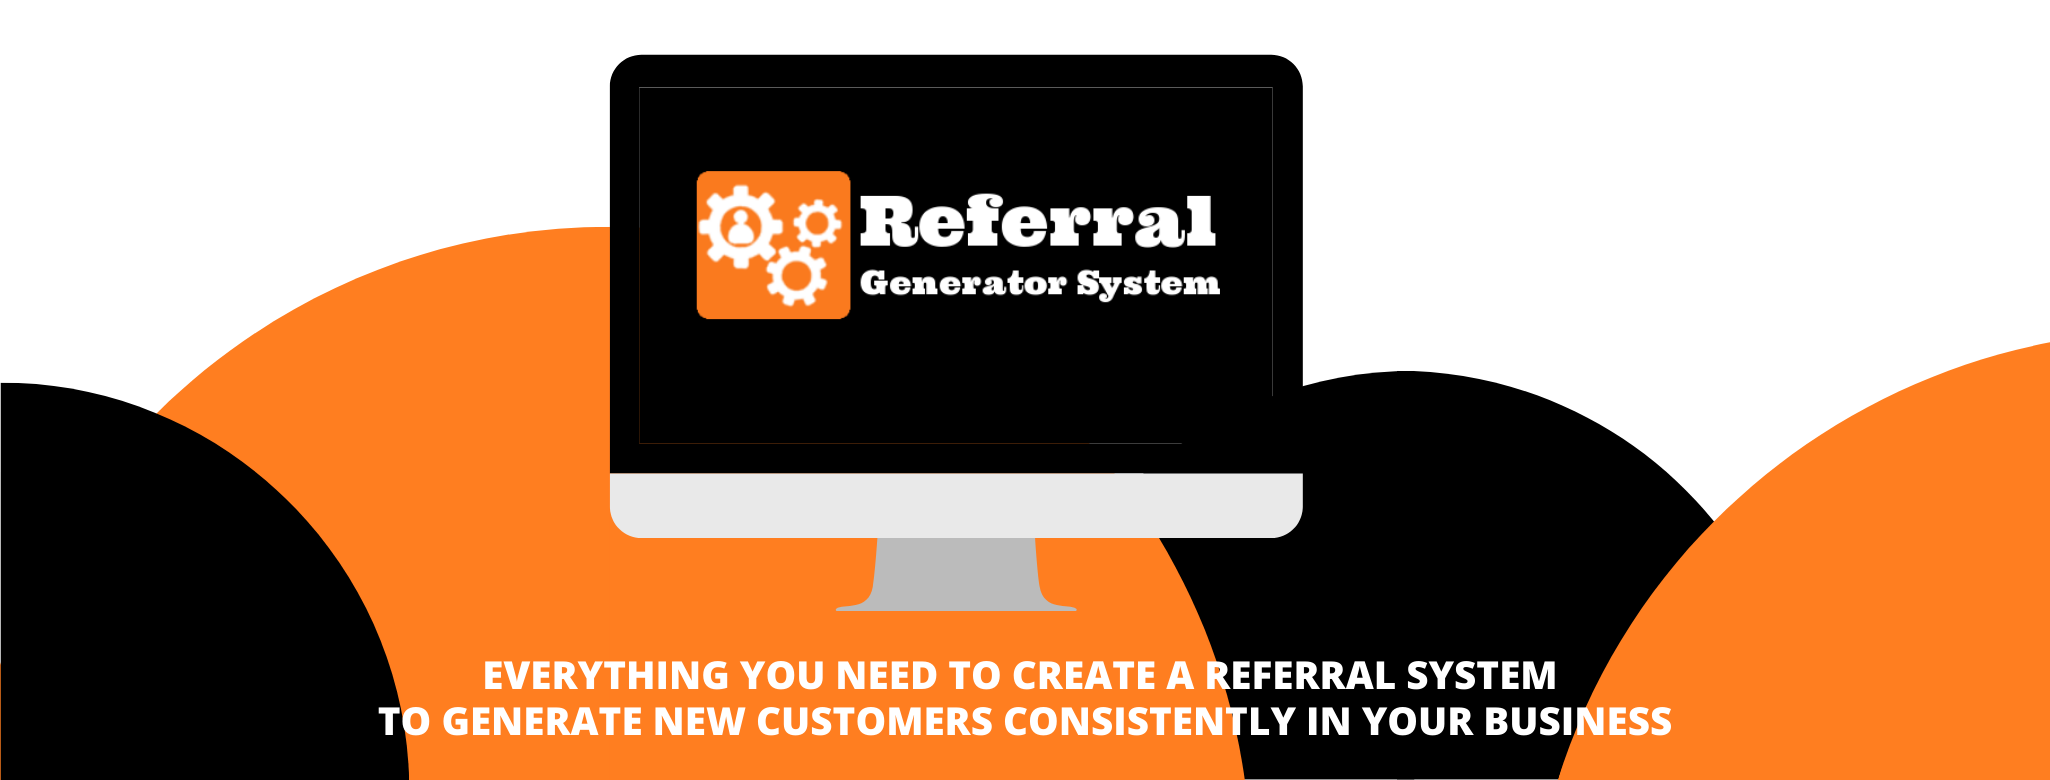 referral generator